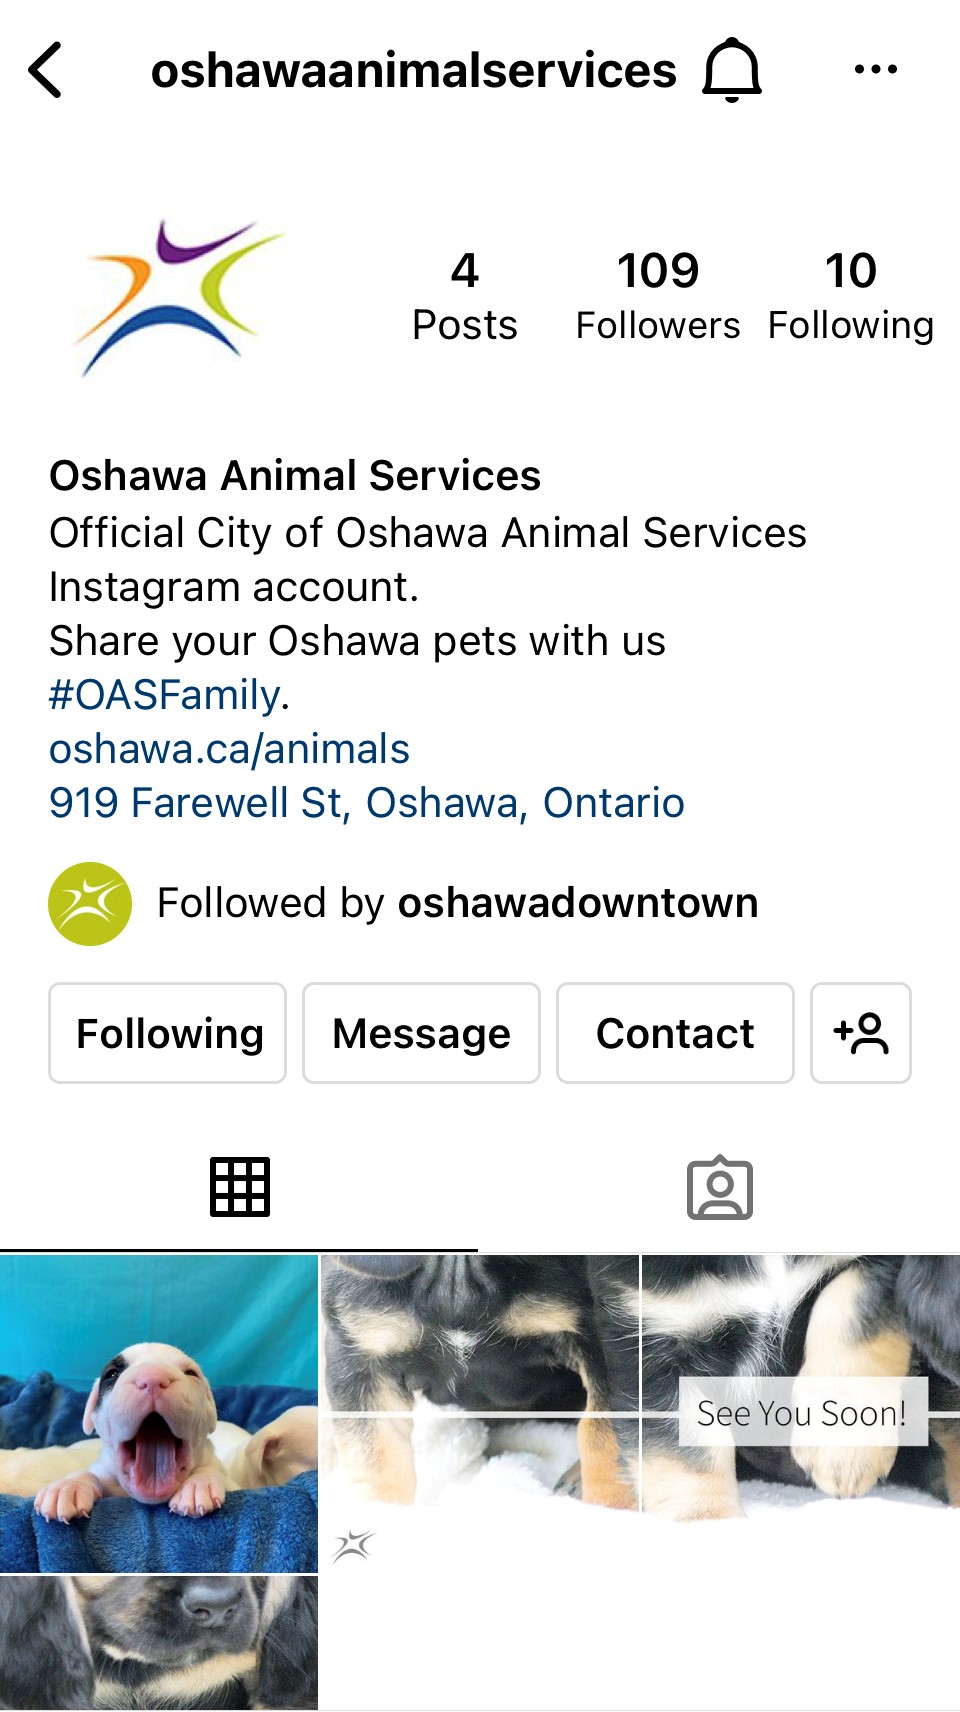 Oshawa Animal Services Instagram account image